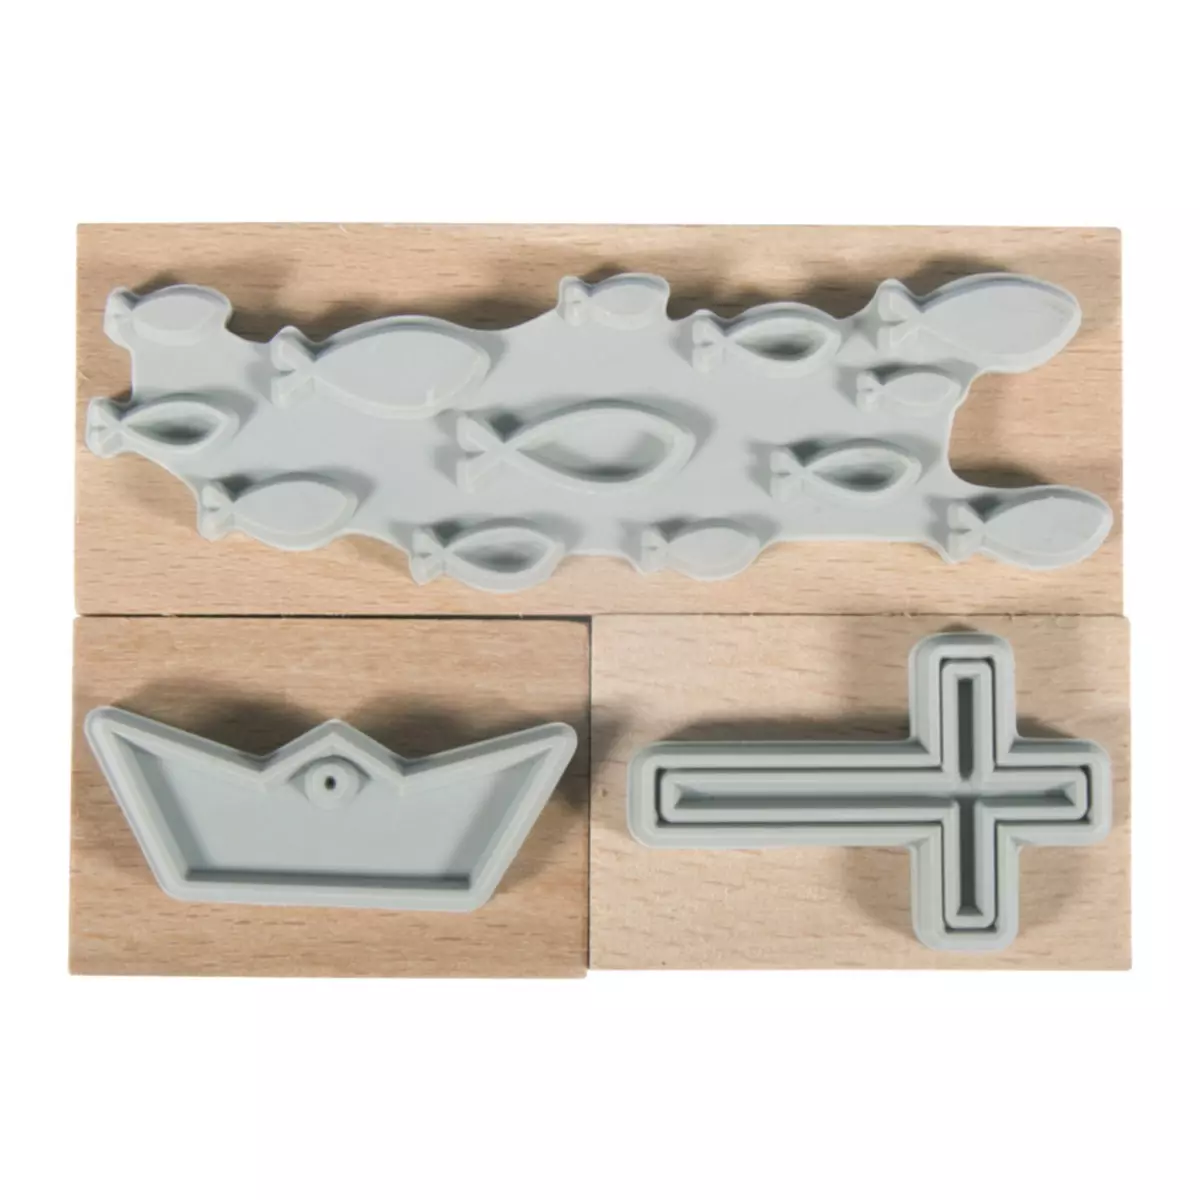 Rayher Kit tampons bois Confirmation,Communion, 3,9x2,6cm - 8,3x2,6cm, boîte 3 pces